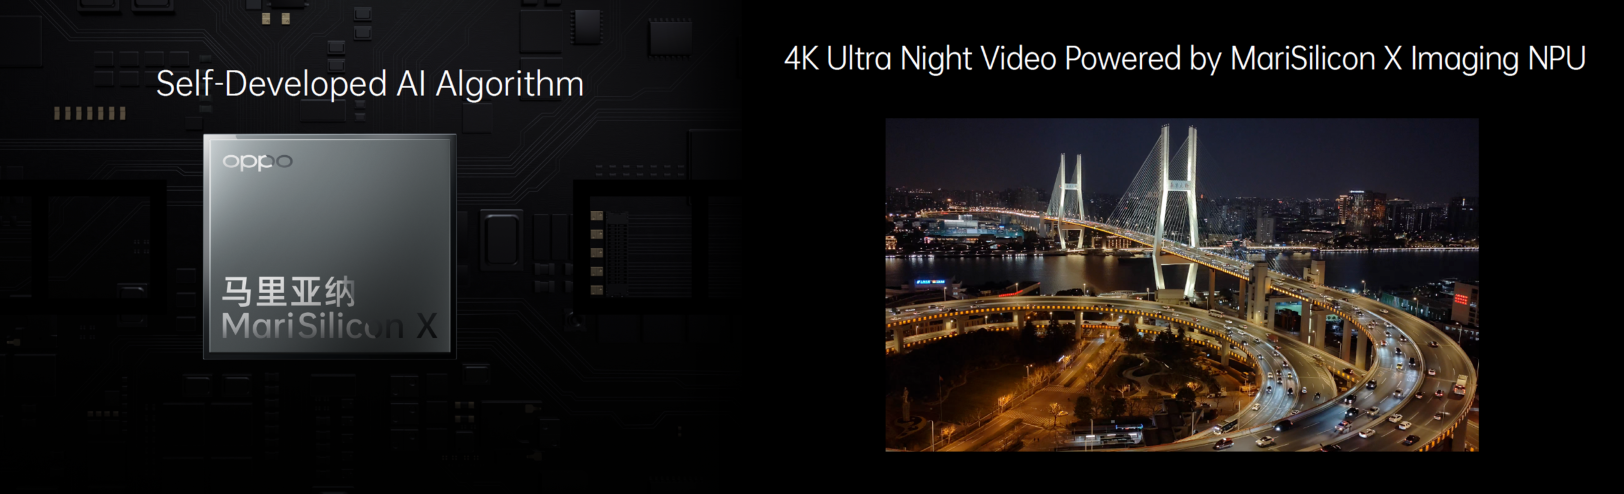 MariSilicon-4K-Ultra-Night-Video